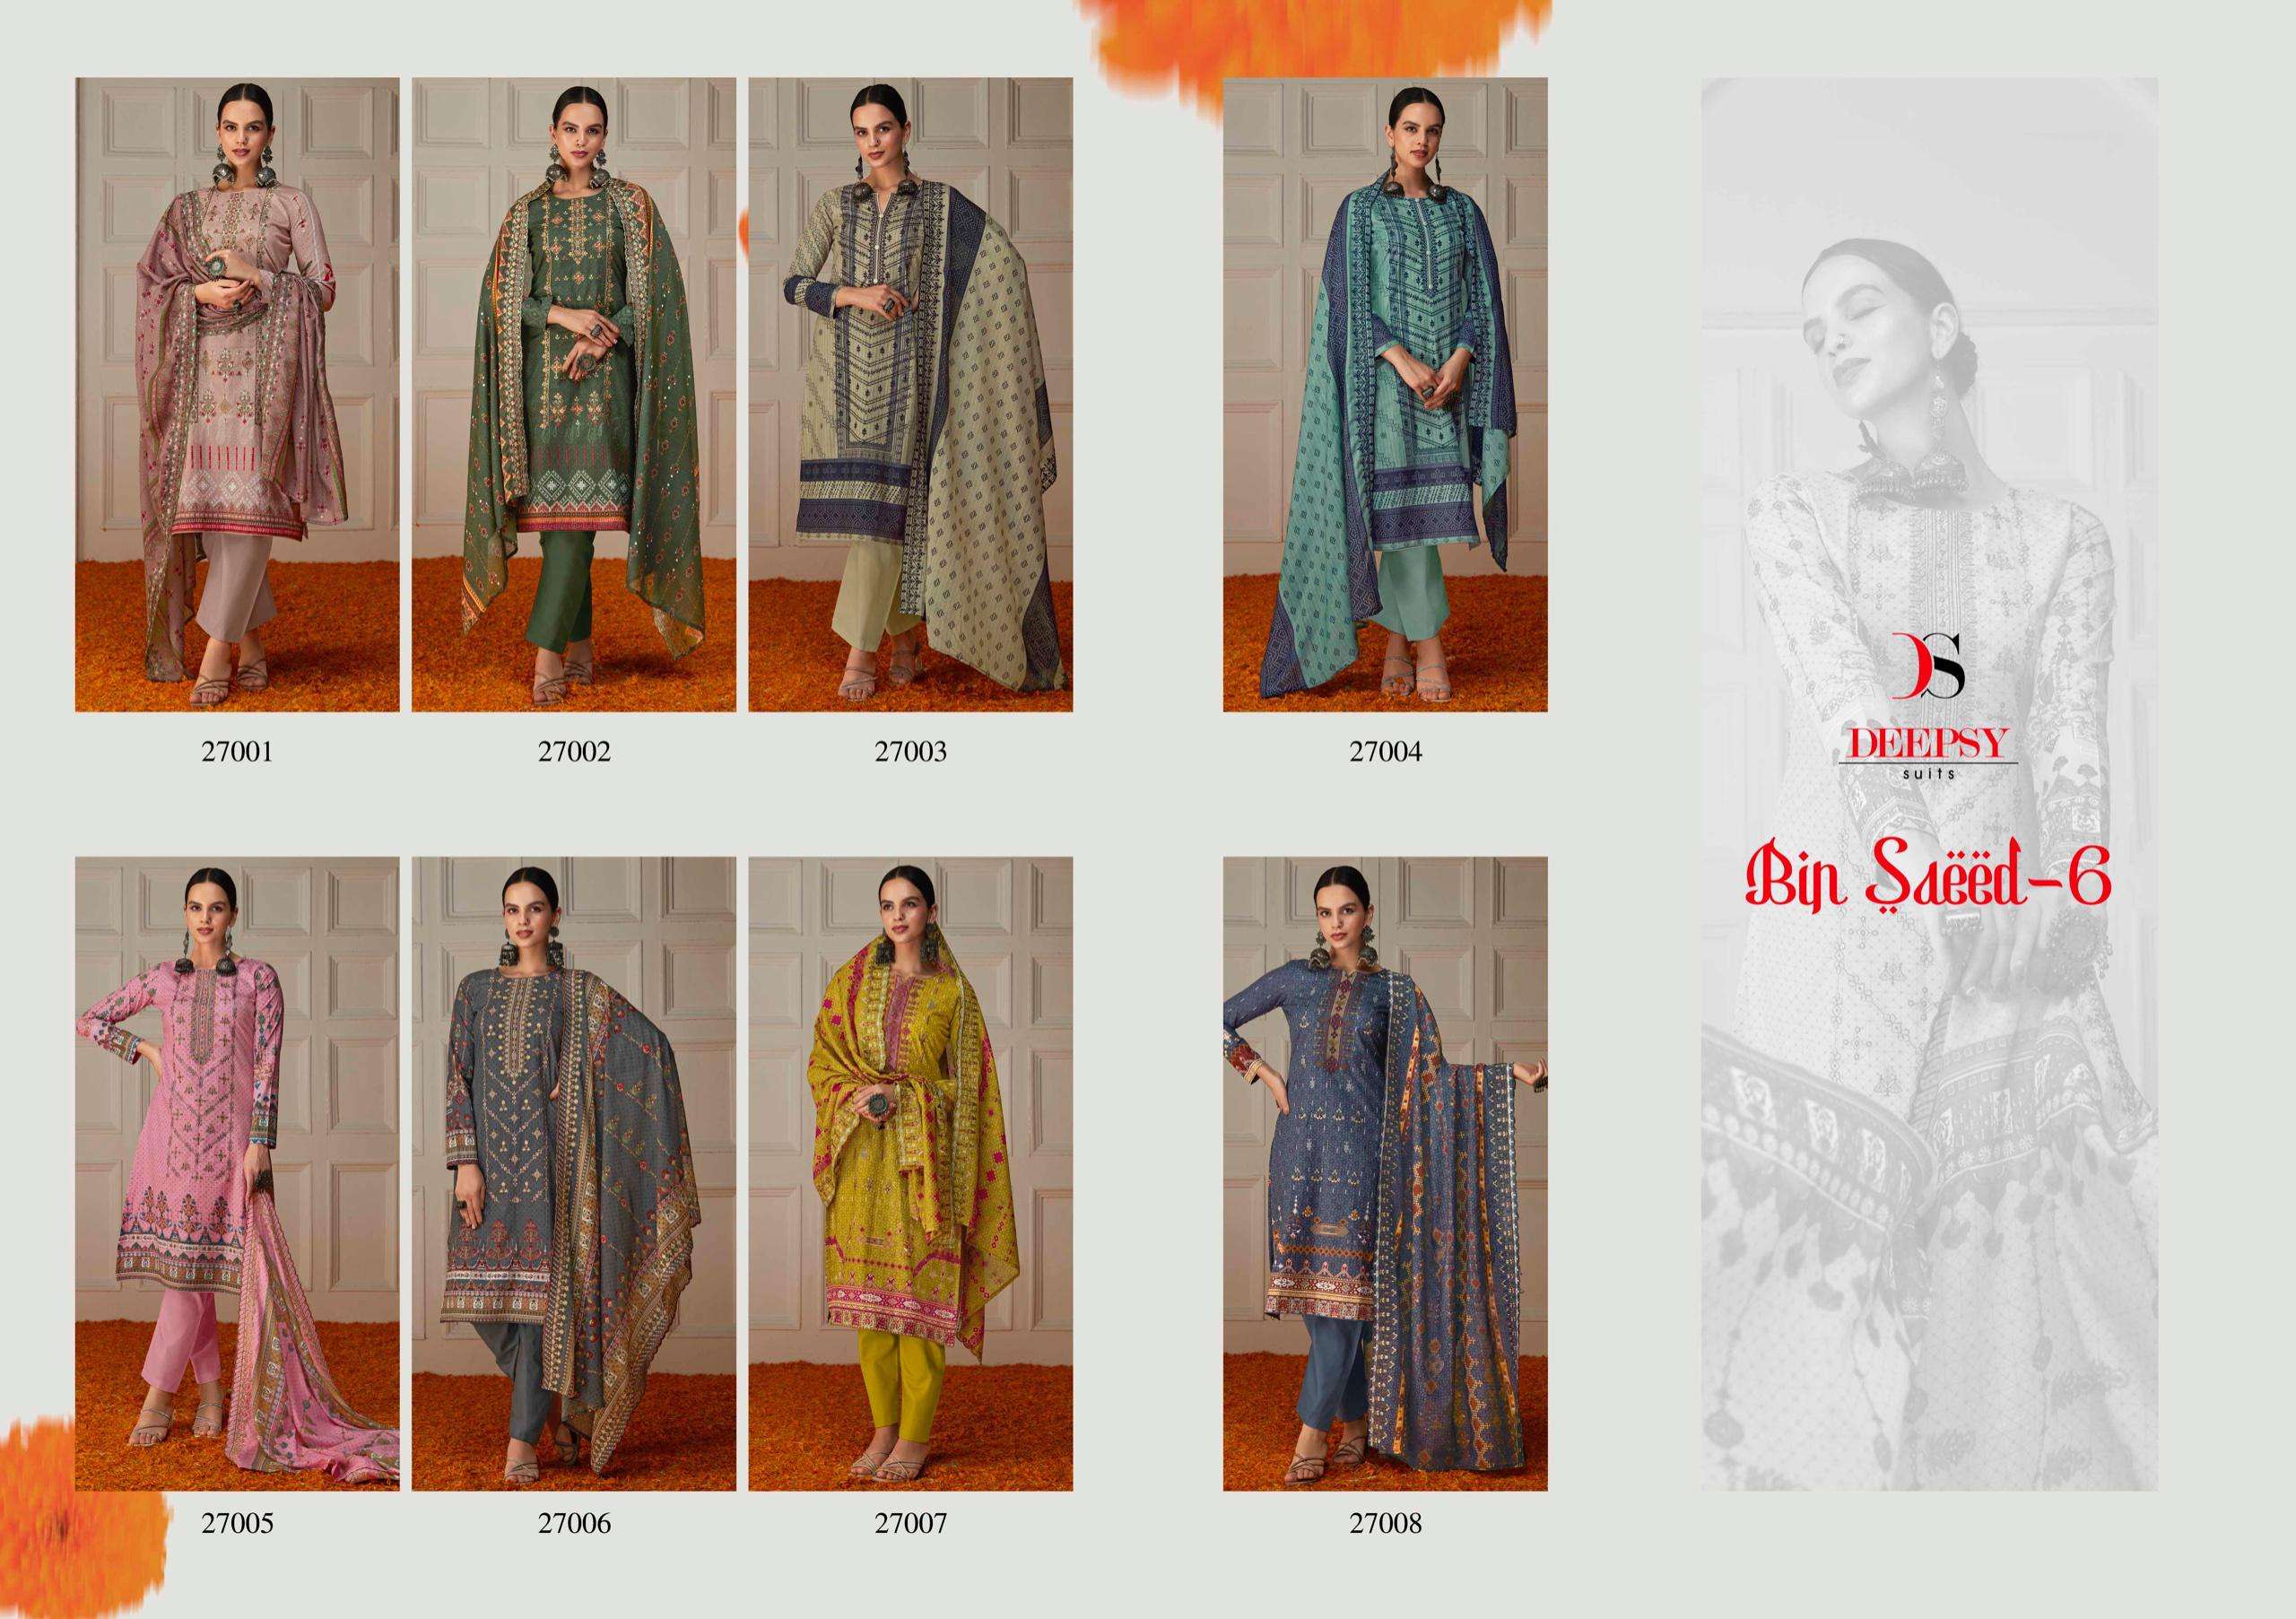 Deepsy Bin Saeed 6 Heavy Embroidery Salwar Suits Wholesale catalog